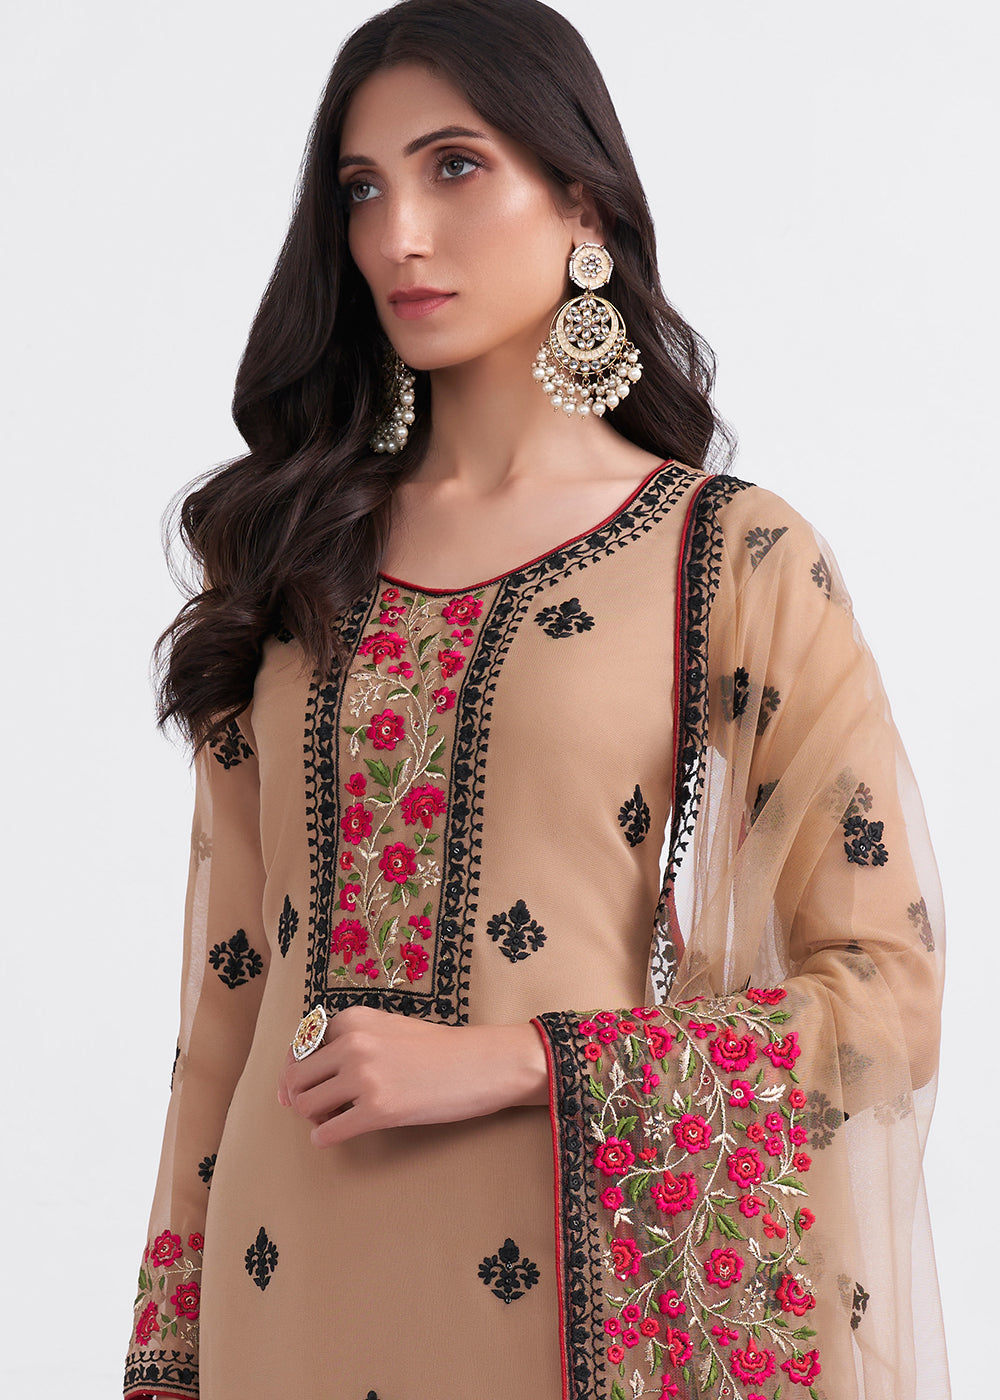 Buy Now Fancy Heavenly Beige Eid Festive Salwar Suit Online in USA, UK, Canada, Germany, Australia & Worldwide at Empress Clothing.